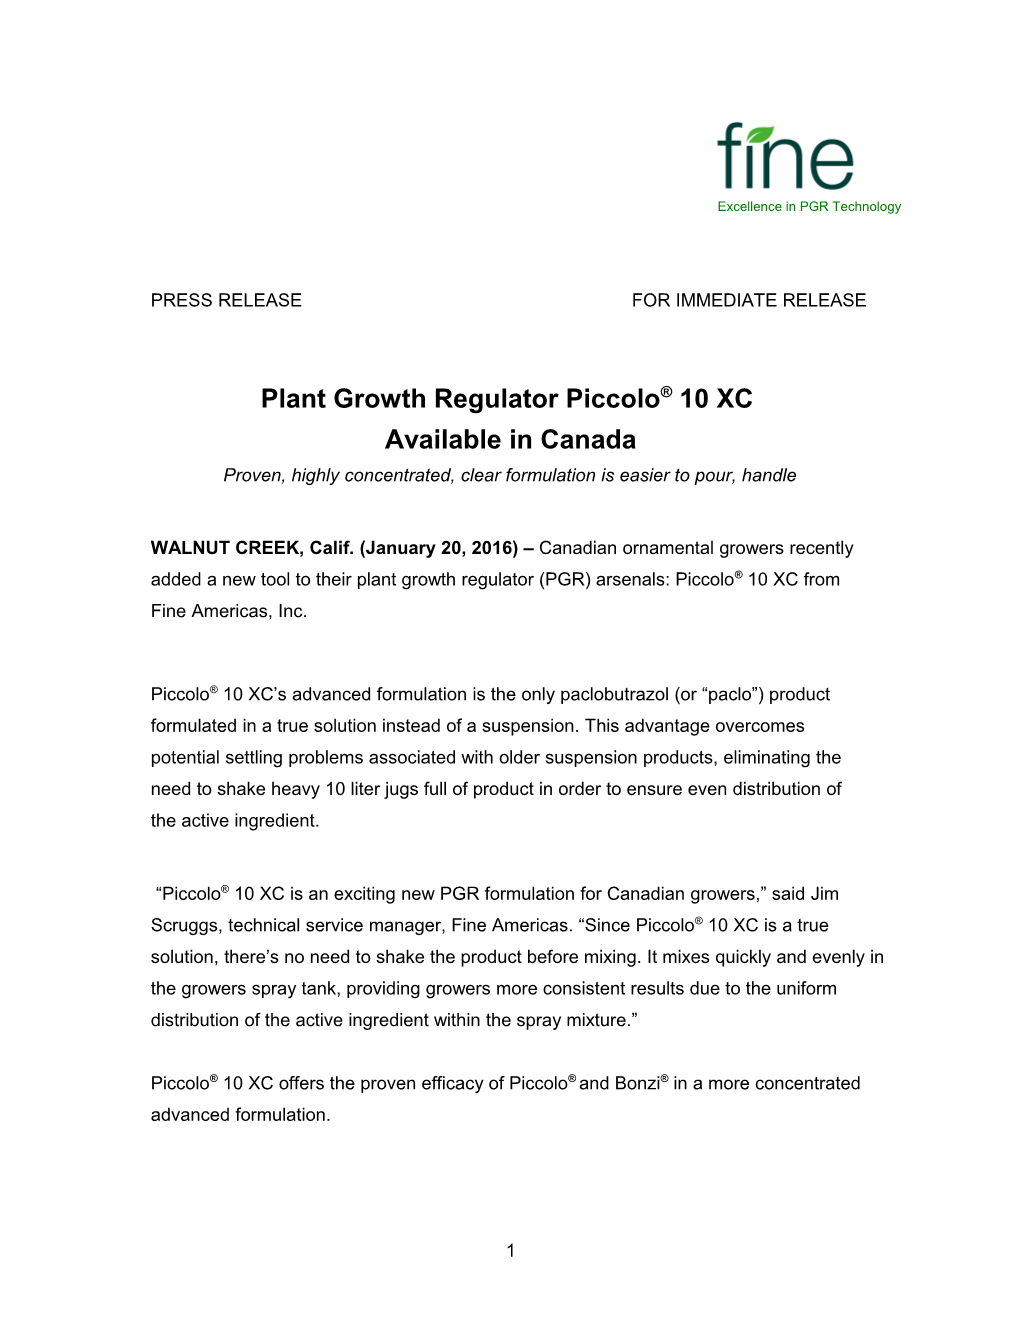 Plant Growth Regulator Piccolo 10XC